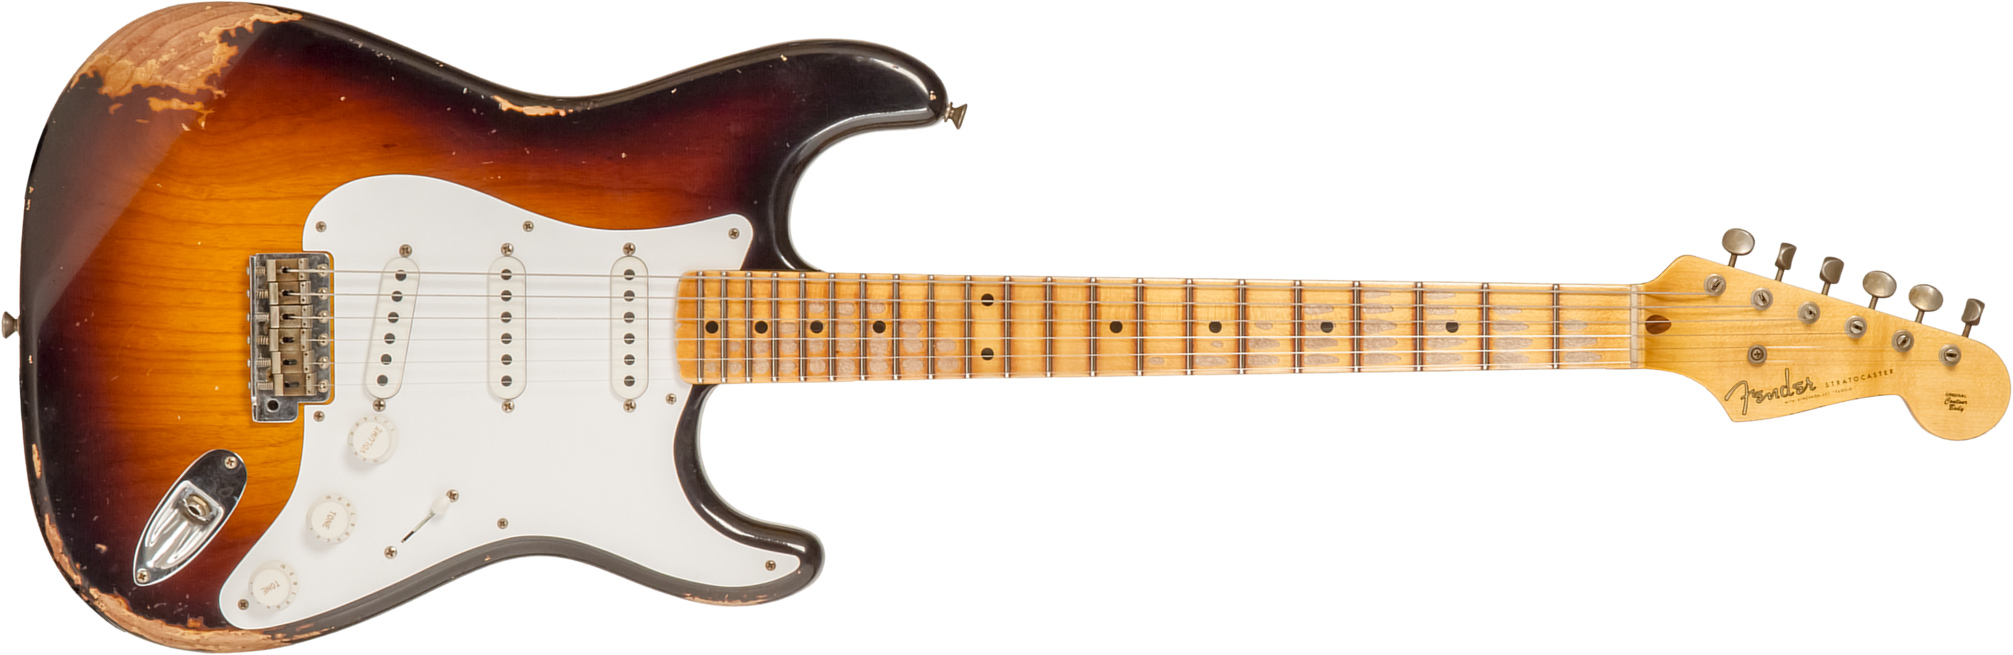 Fender Custom Shop Strat 1954 70th Anniv. 3s Trem Mn #xn4309 - Heavy Relic Wide Fade 2-color Sunburst - Elektrische gitaar in Str-vorm - Main picture